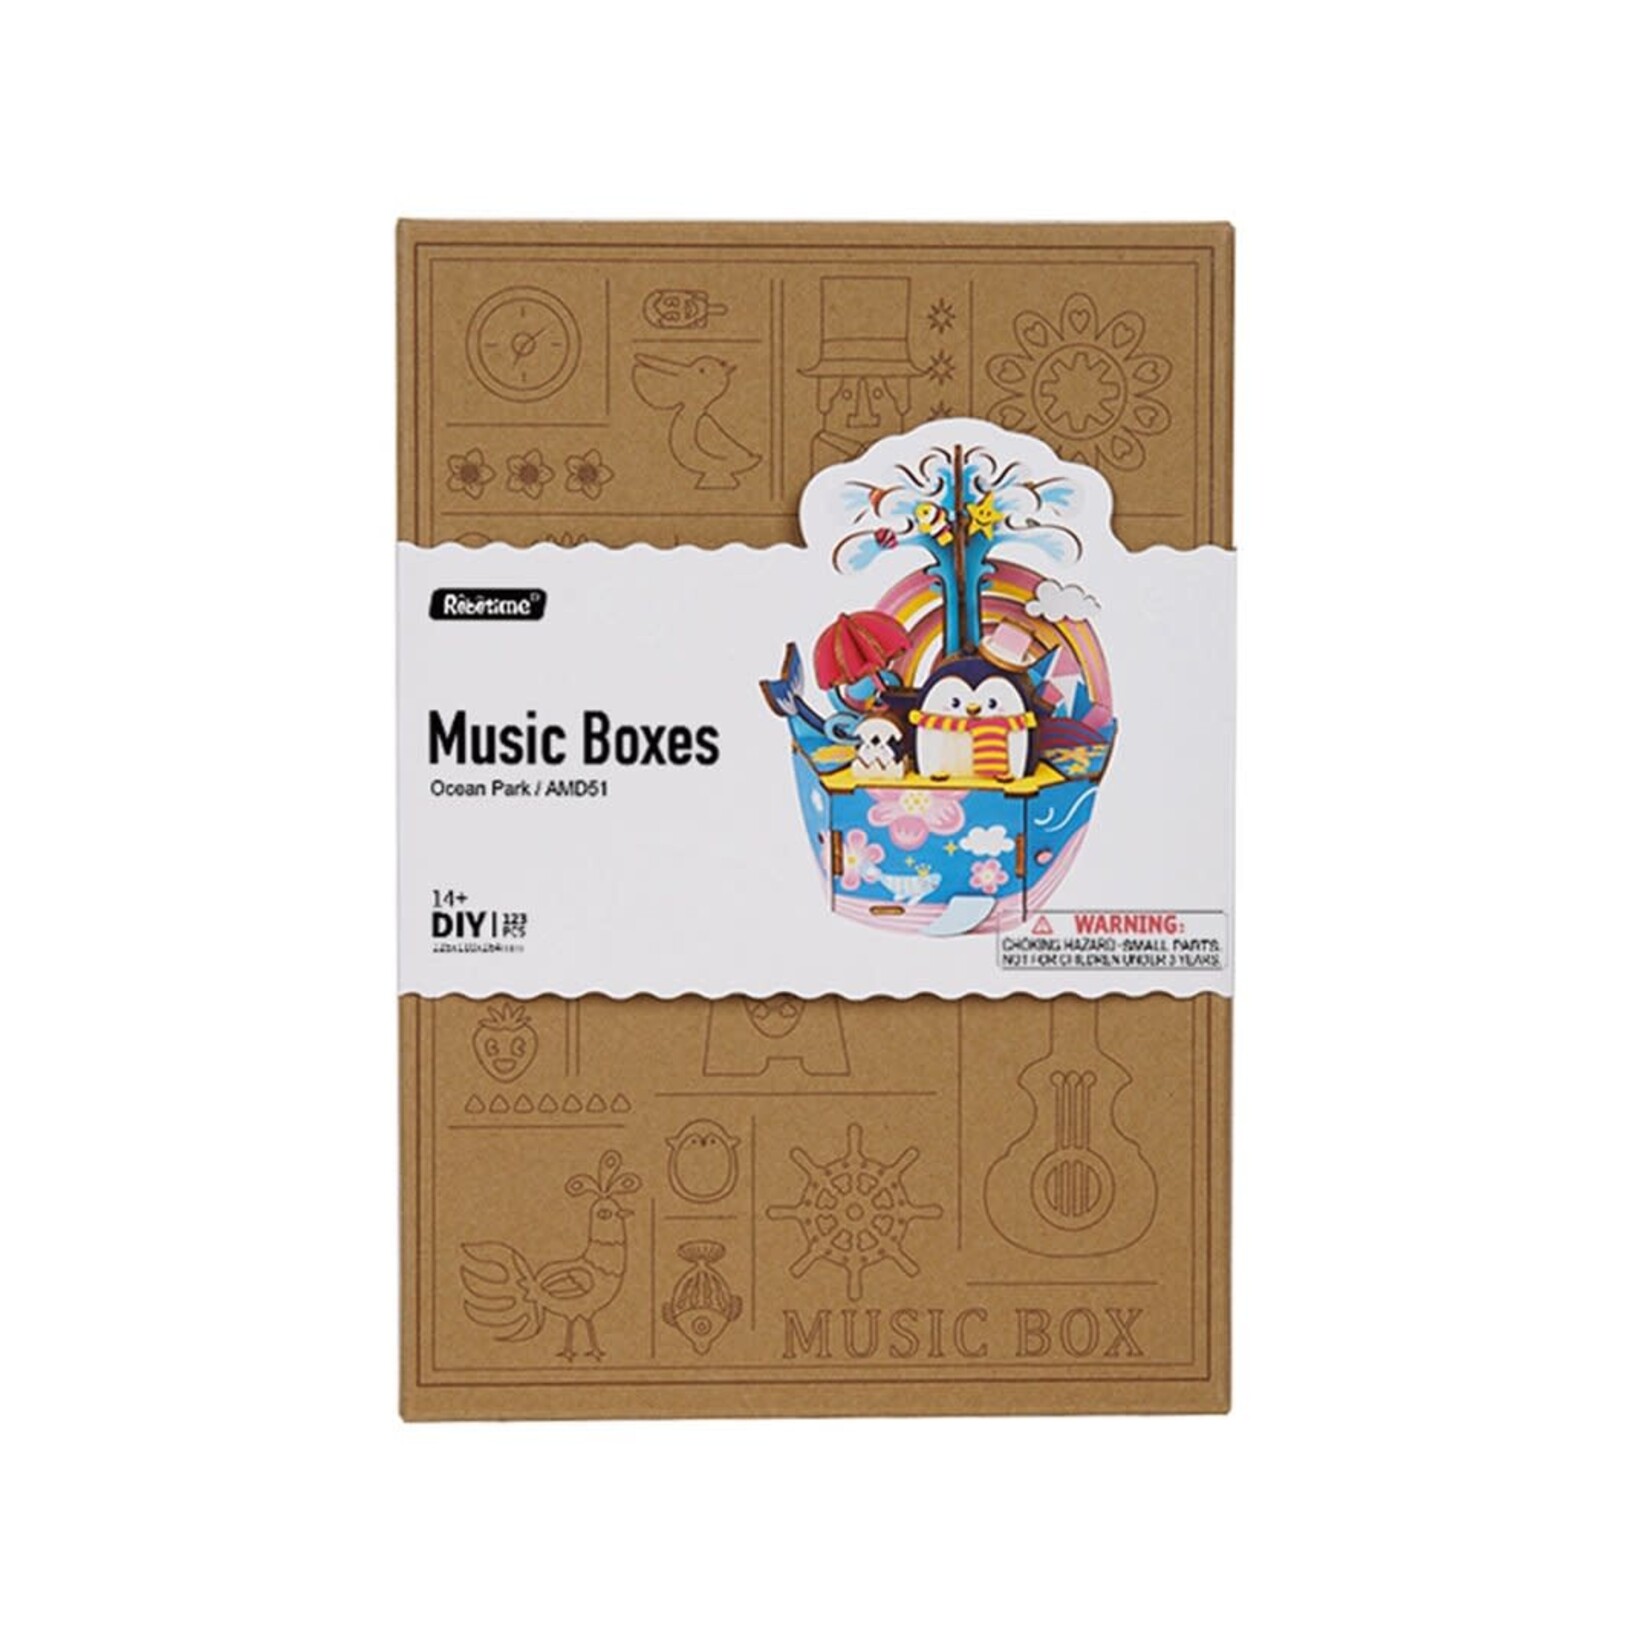 Music Box AMD51 Ocean Park